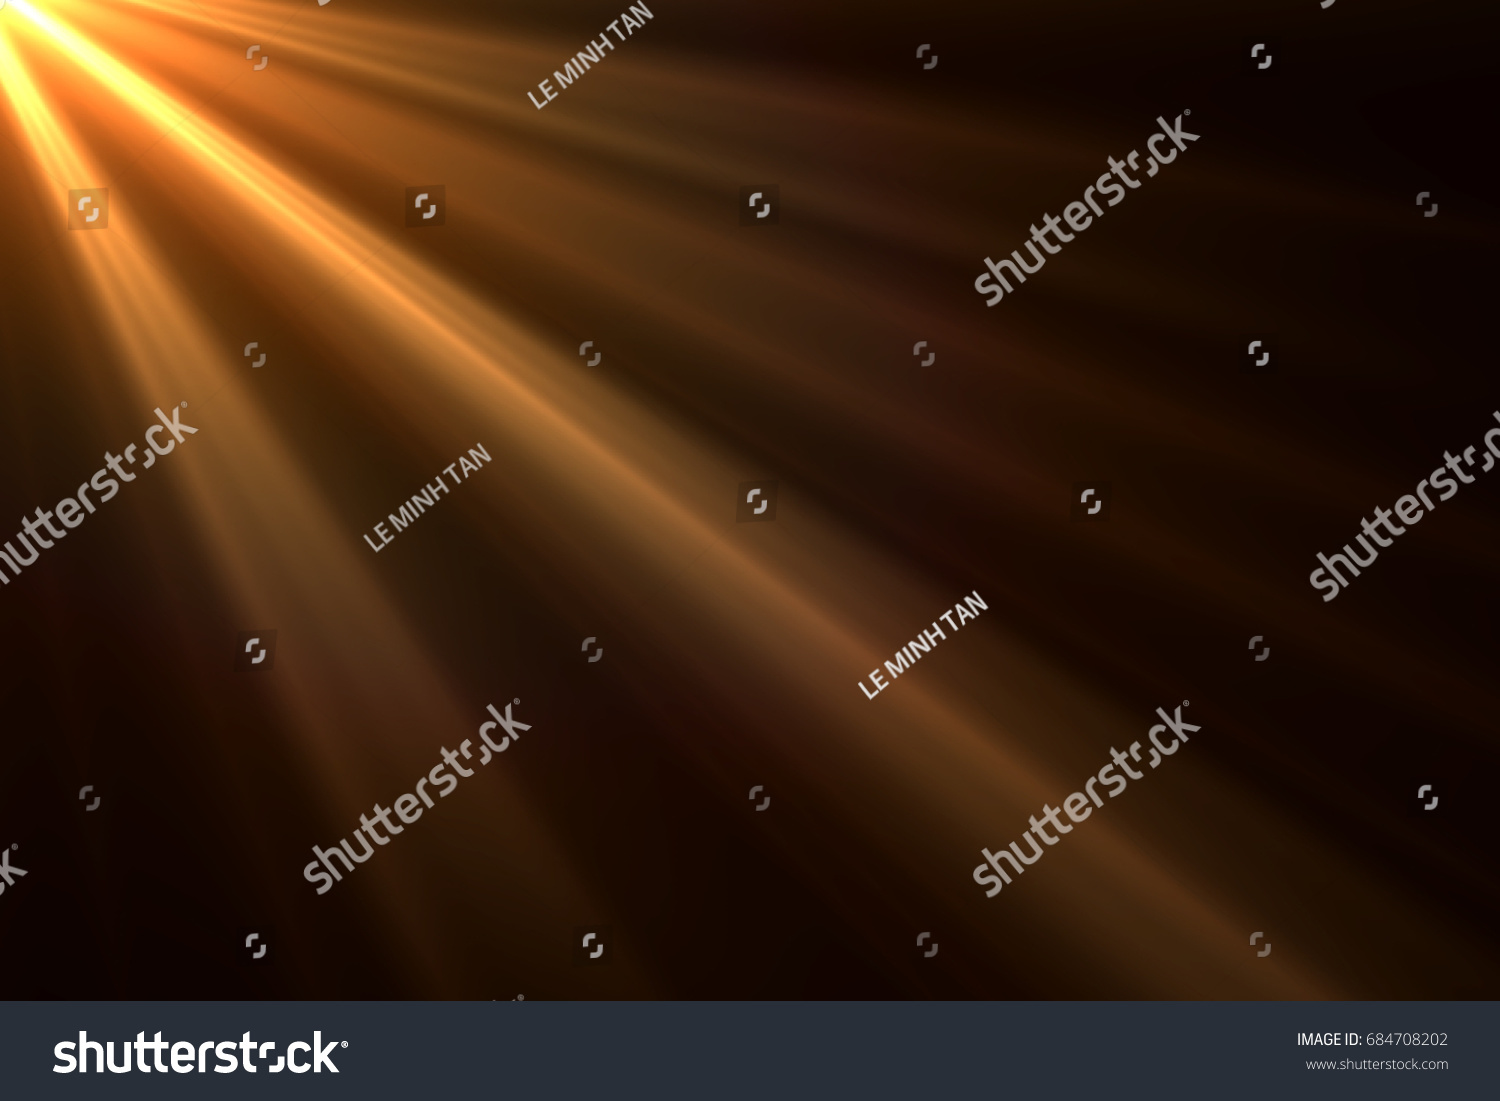 Sun rays light isolated on black background for overlay design #684708202